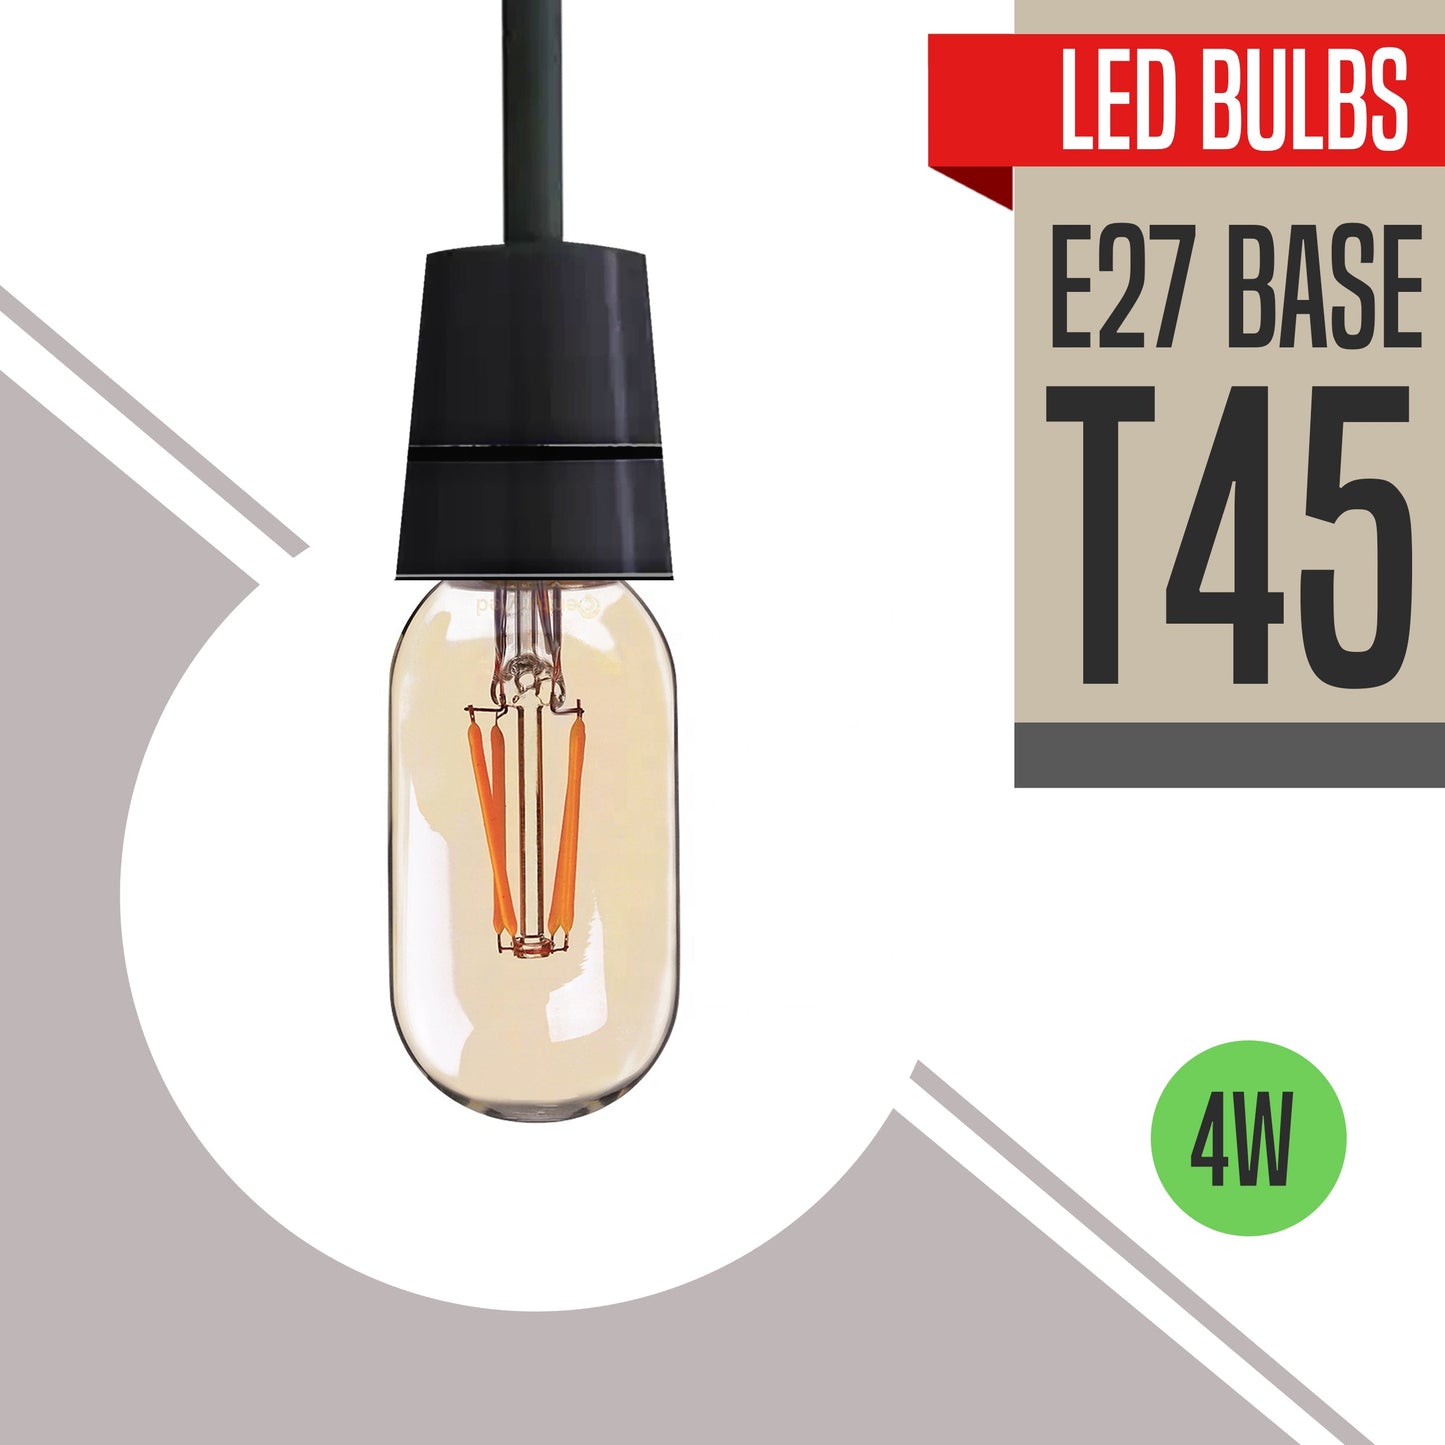 Vintage Retro Style Energy-saving LED 4W T45 E26 LED Bulb Pack 5